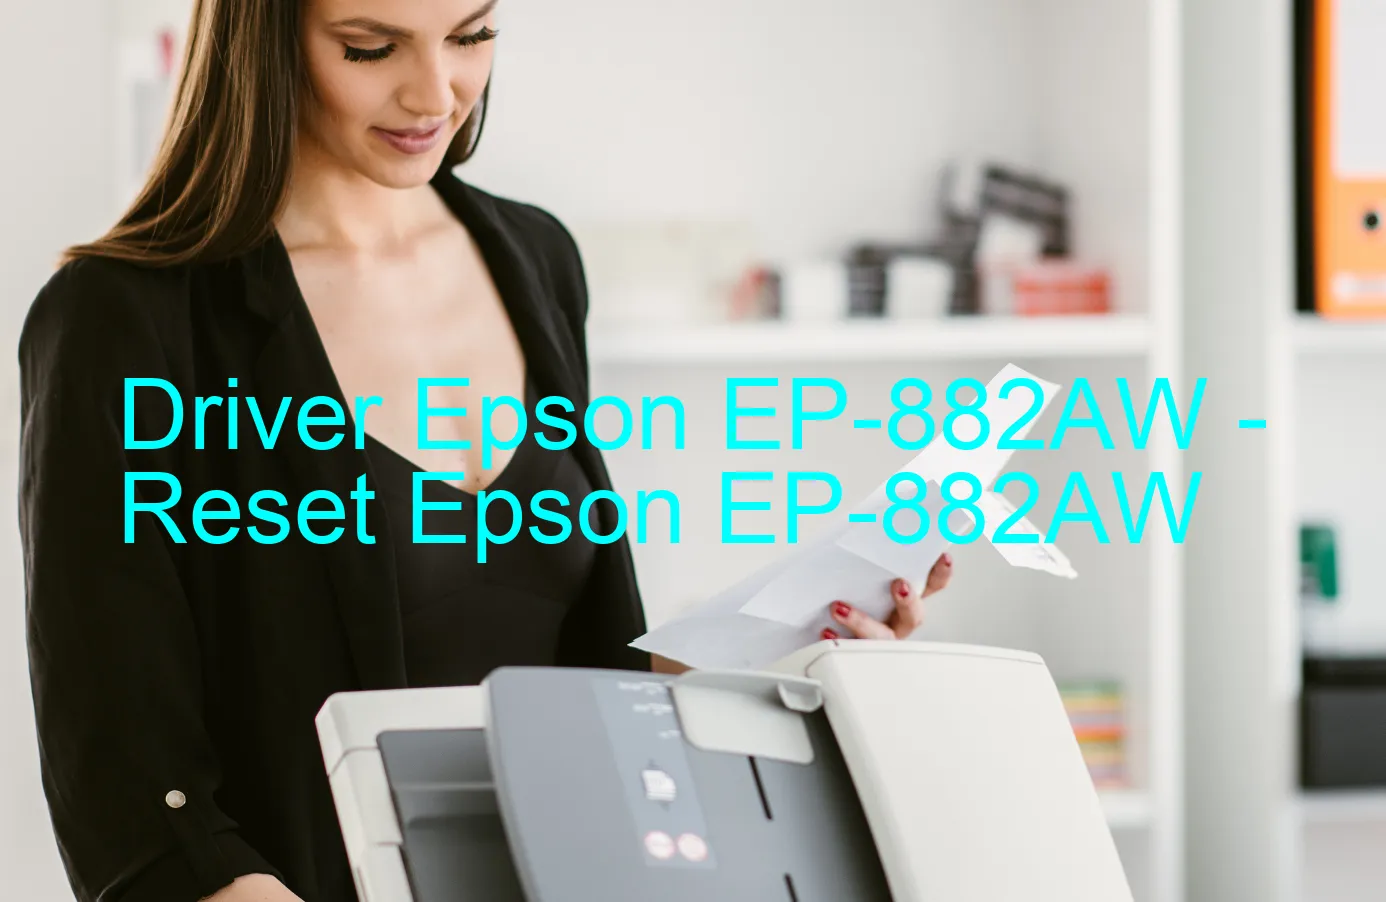 Epson EP-882AWのドライバー、Epson EP-882AWのリセットソフトウェア